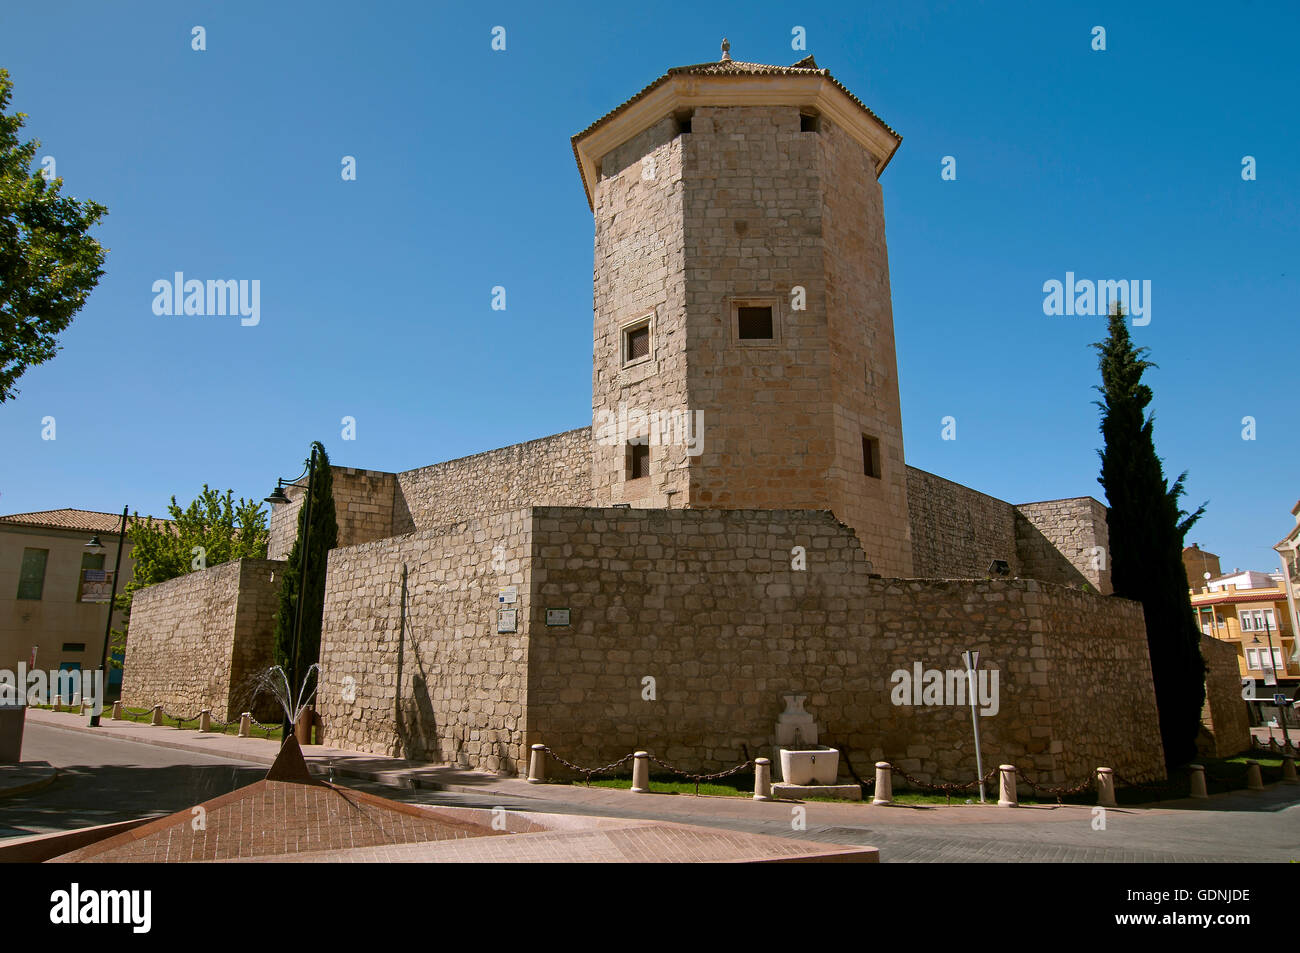 The Moral Castle - 11th century, Lucena, Cordoba province, Region of Andalusia, Spain, Europe Stock Photo